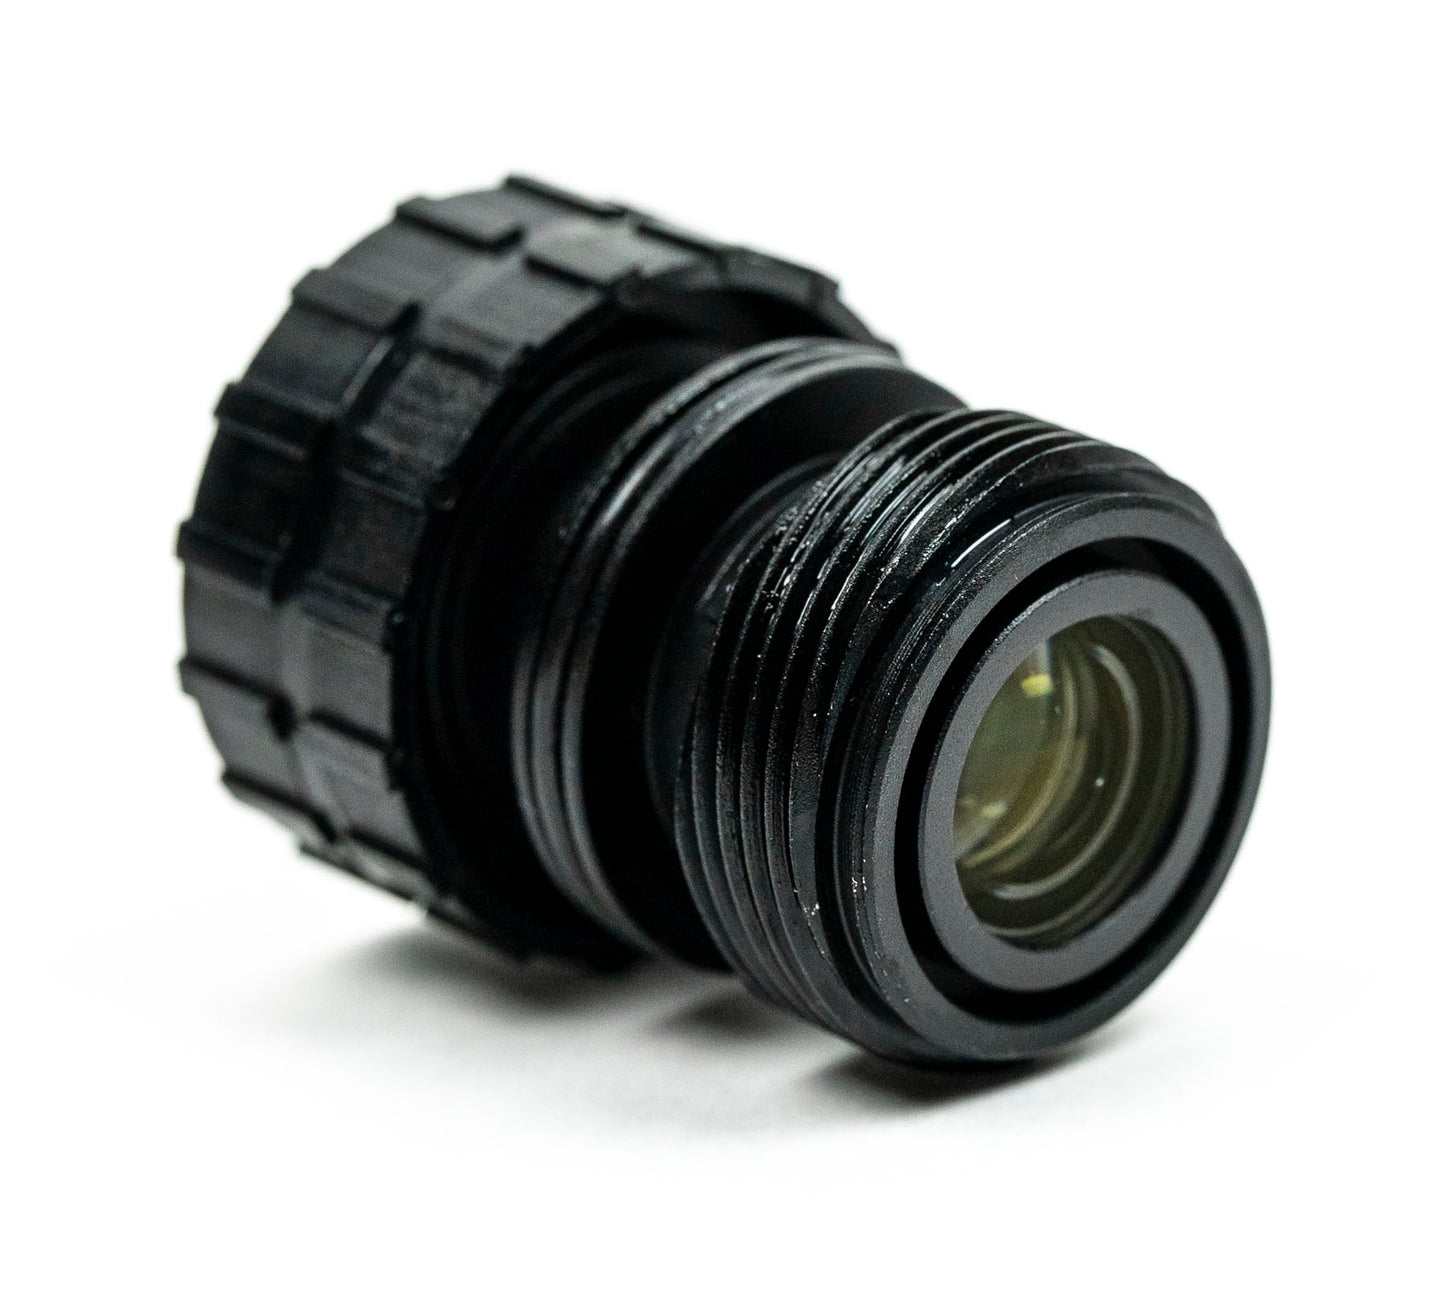 Optronics Engineering PVS-14 Objective Lens